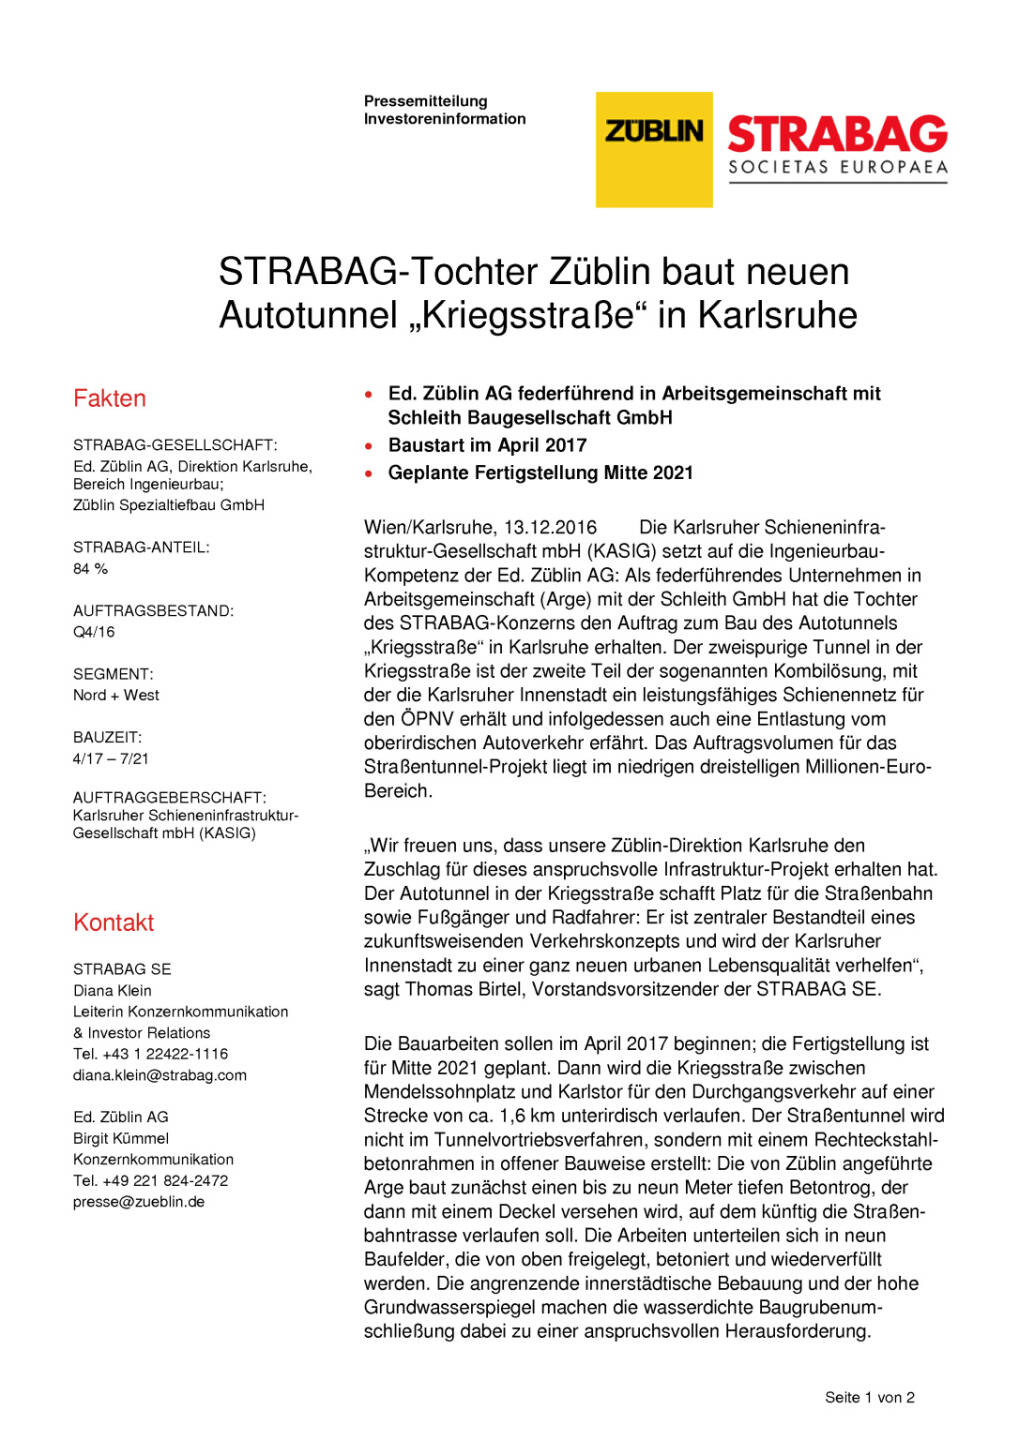 Strabag-Tochter Züblin baut neuen Autotunnel „Kriegsstraße“ in Karlsruhe , Seite 1/2, komplettes Dokument unter http://boerse-social.com/static/uploads/file_2014_strabag_karlsruhe.pdf